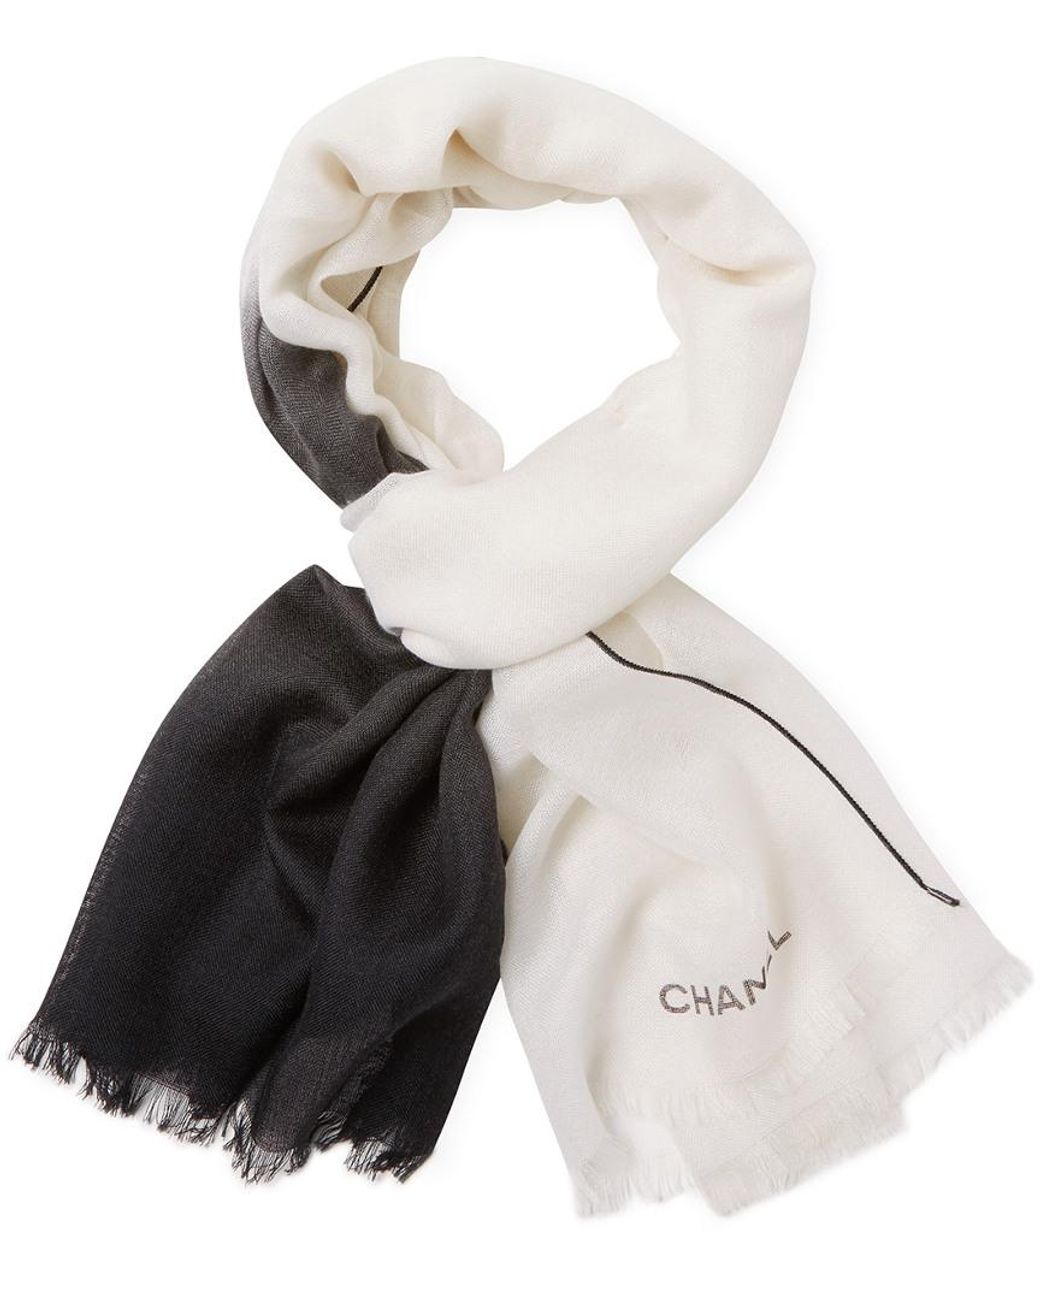 Chanel Unisex CC A Set of Ahead Beanie Gloves Scarf White Black